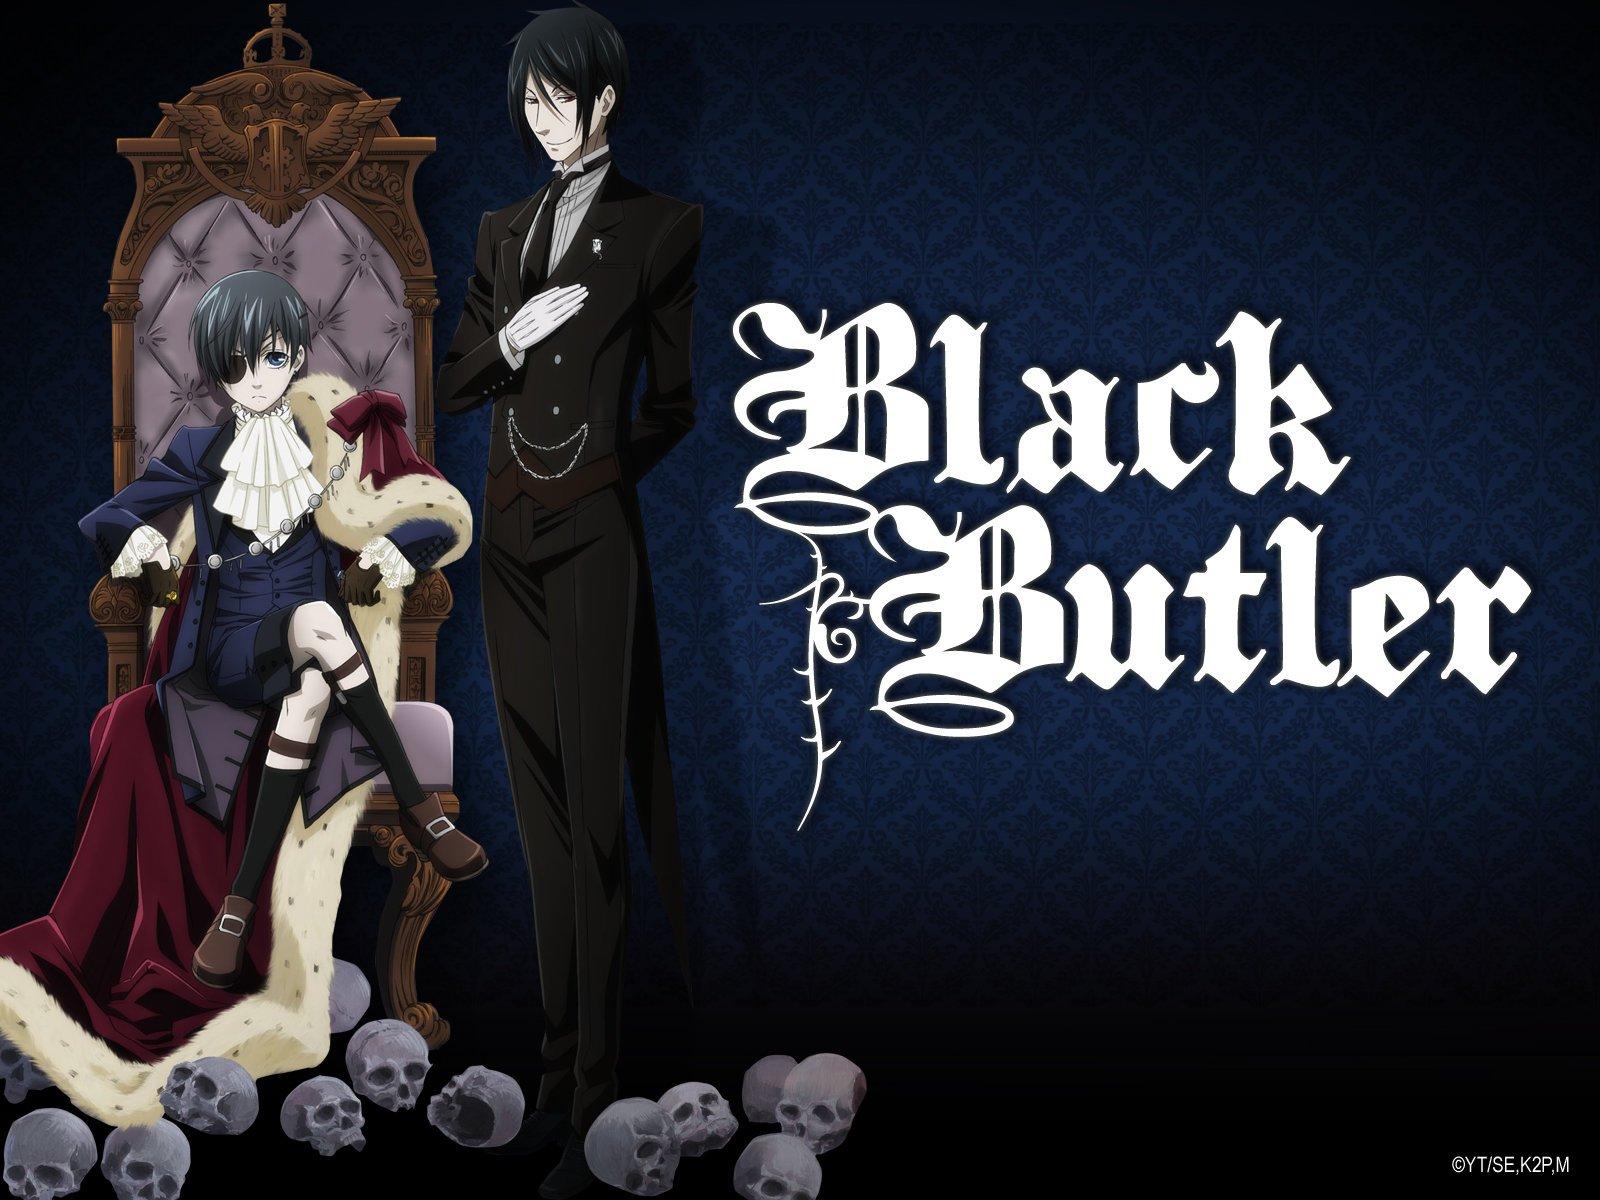 Watch Black Butler Season